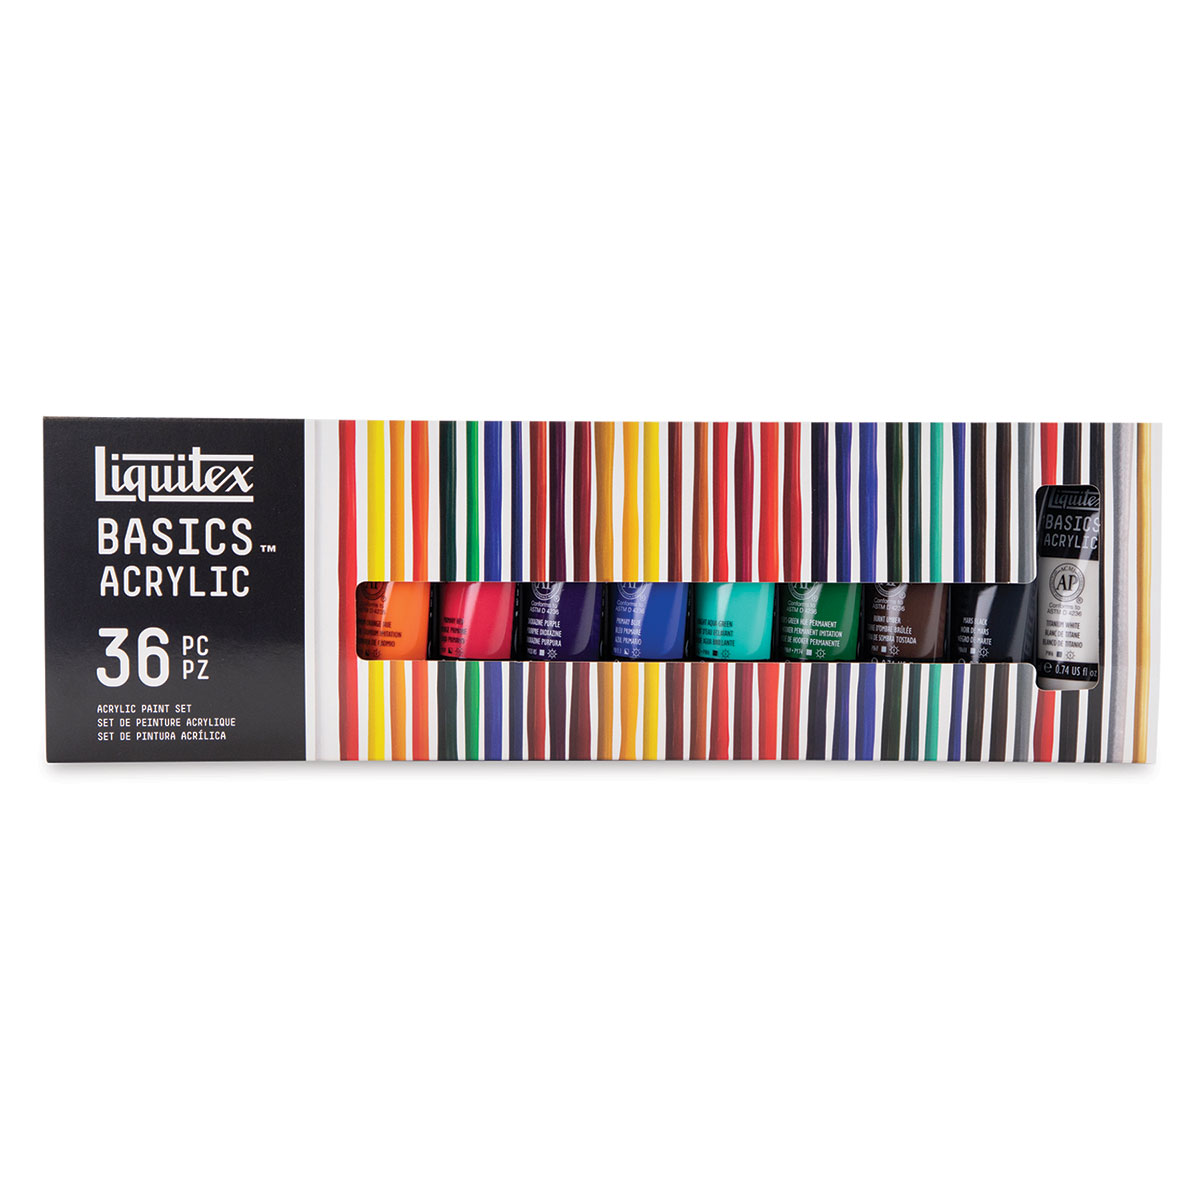 Liquitex BASICS Acrylic Paint Mixing Set, 2.53 Ounce Tubes, Set of 8